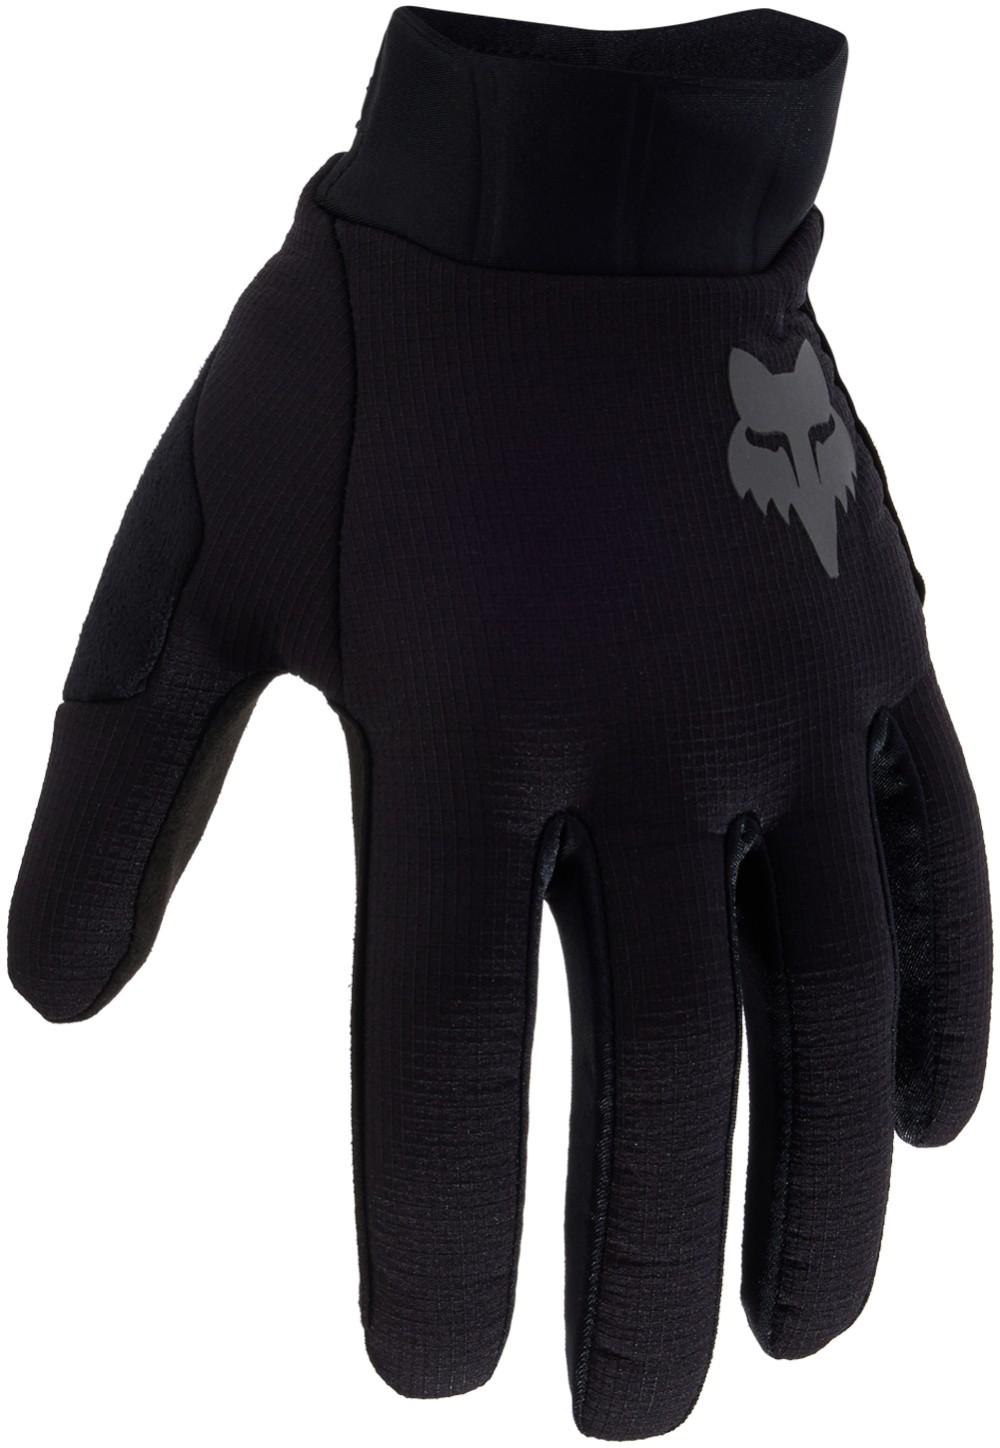 Defend Lo-Pro Fire Long Finger MTB Gloves image 0